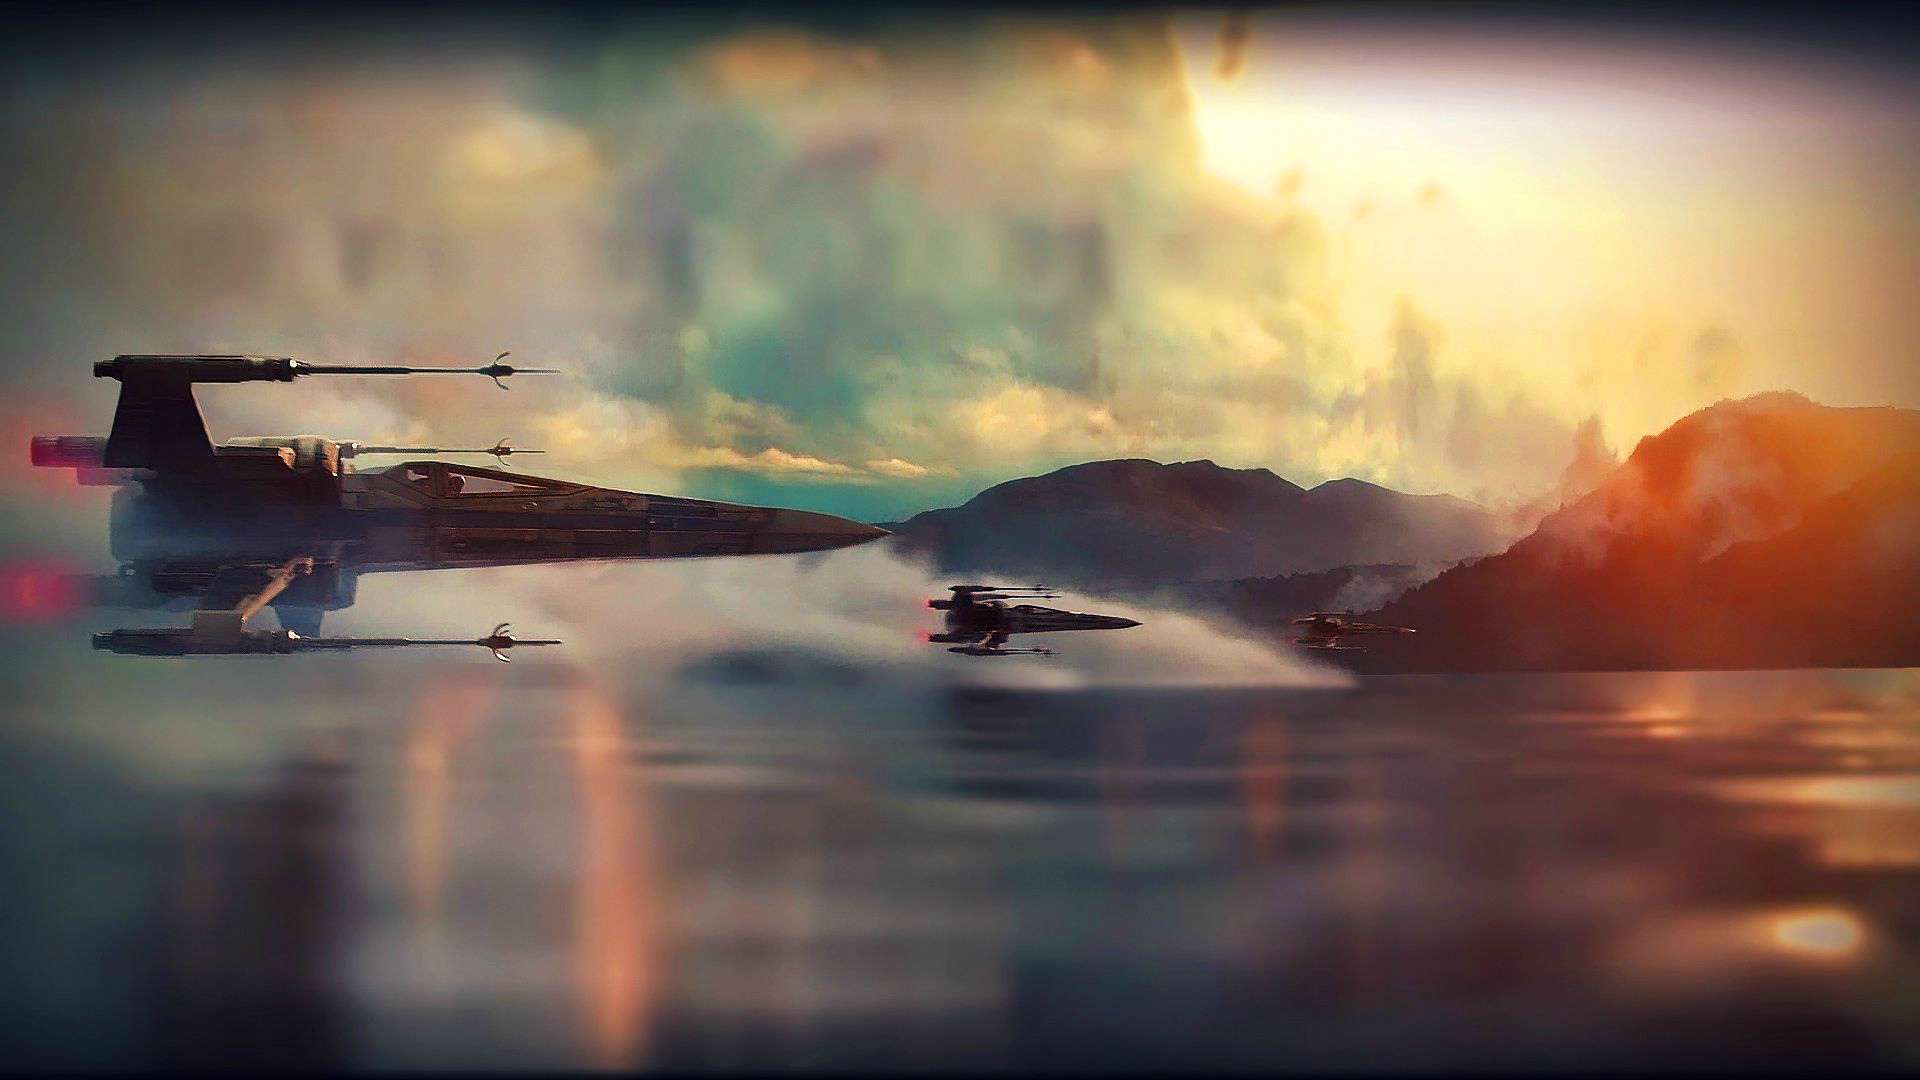 Star Wars Episode VII The Force Awakens Wallpaper 003